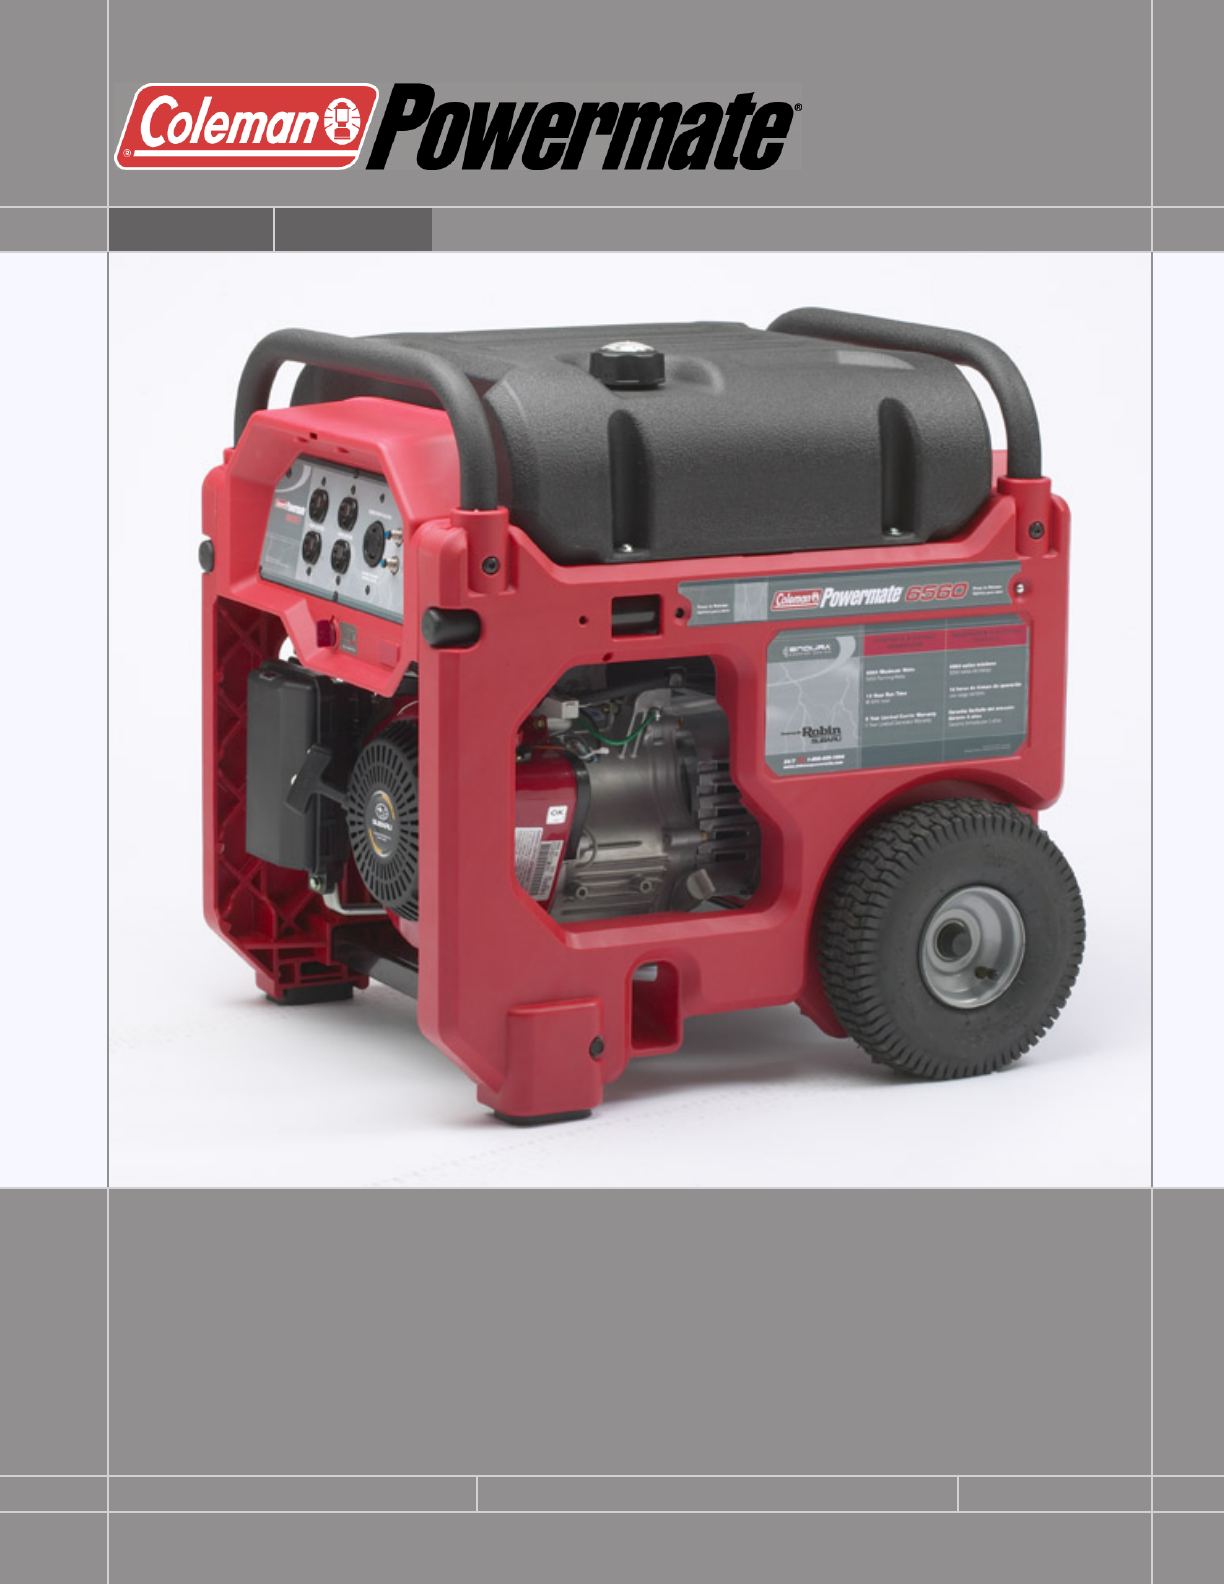 You are currently viewing Tipps Zur Fehlerbehebung Für Den Coleman Powermate 6560 Generator